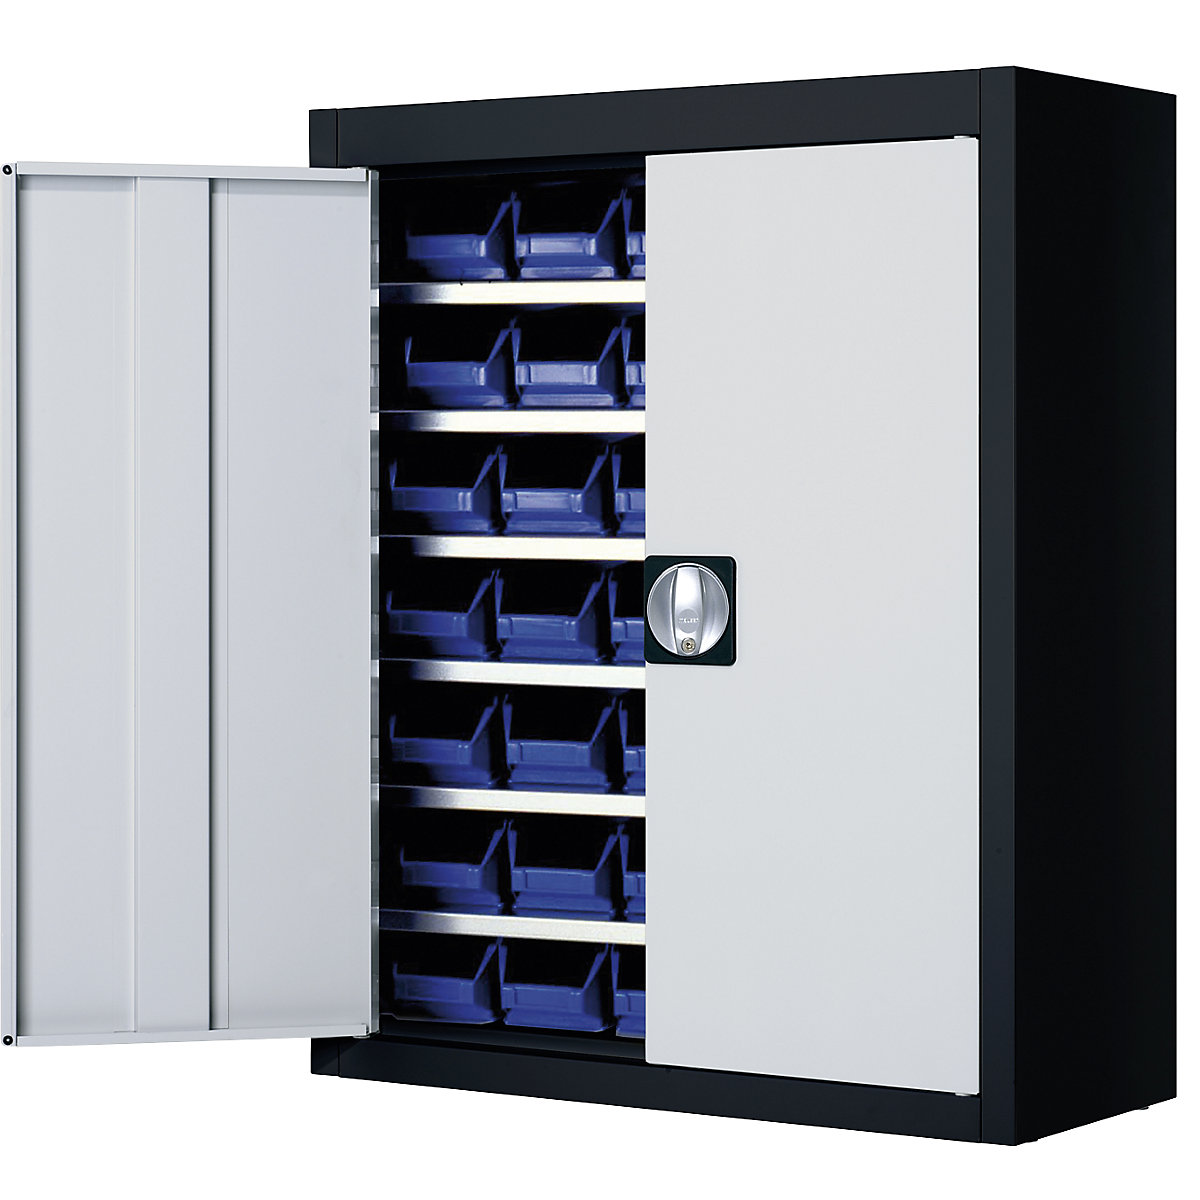 Storage cupboard with open fronted storage bins – mauser, HxWxD 820 x 680 x 280 mm, two-colour, black body, grey doors, 42 bins-6